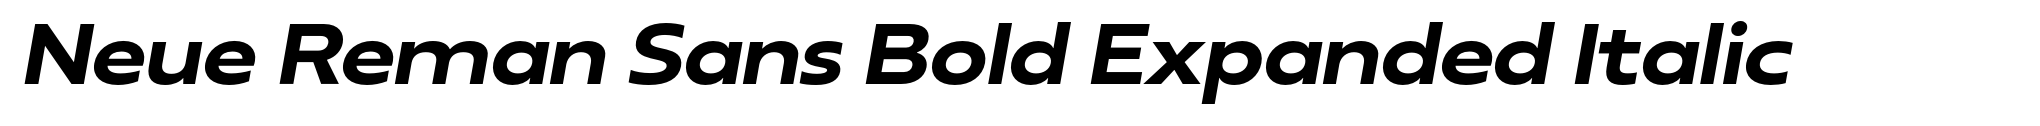 Neue Reman Sans Bold Expanded Italic image